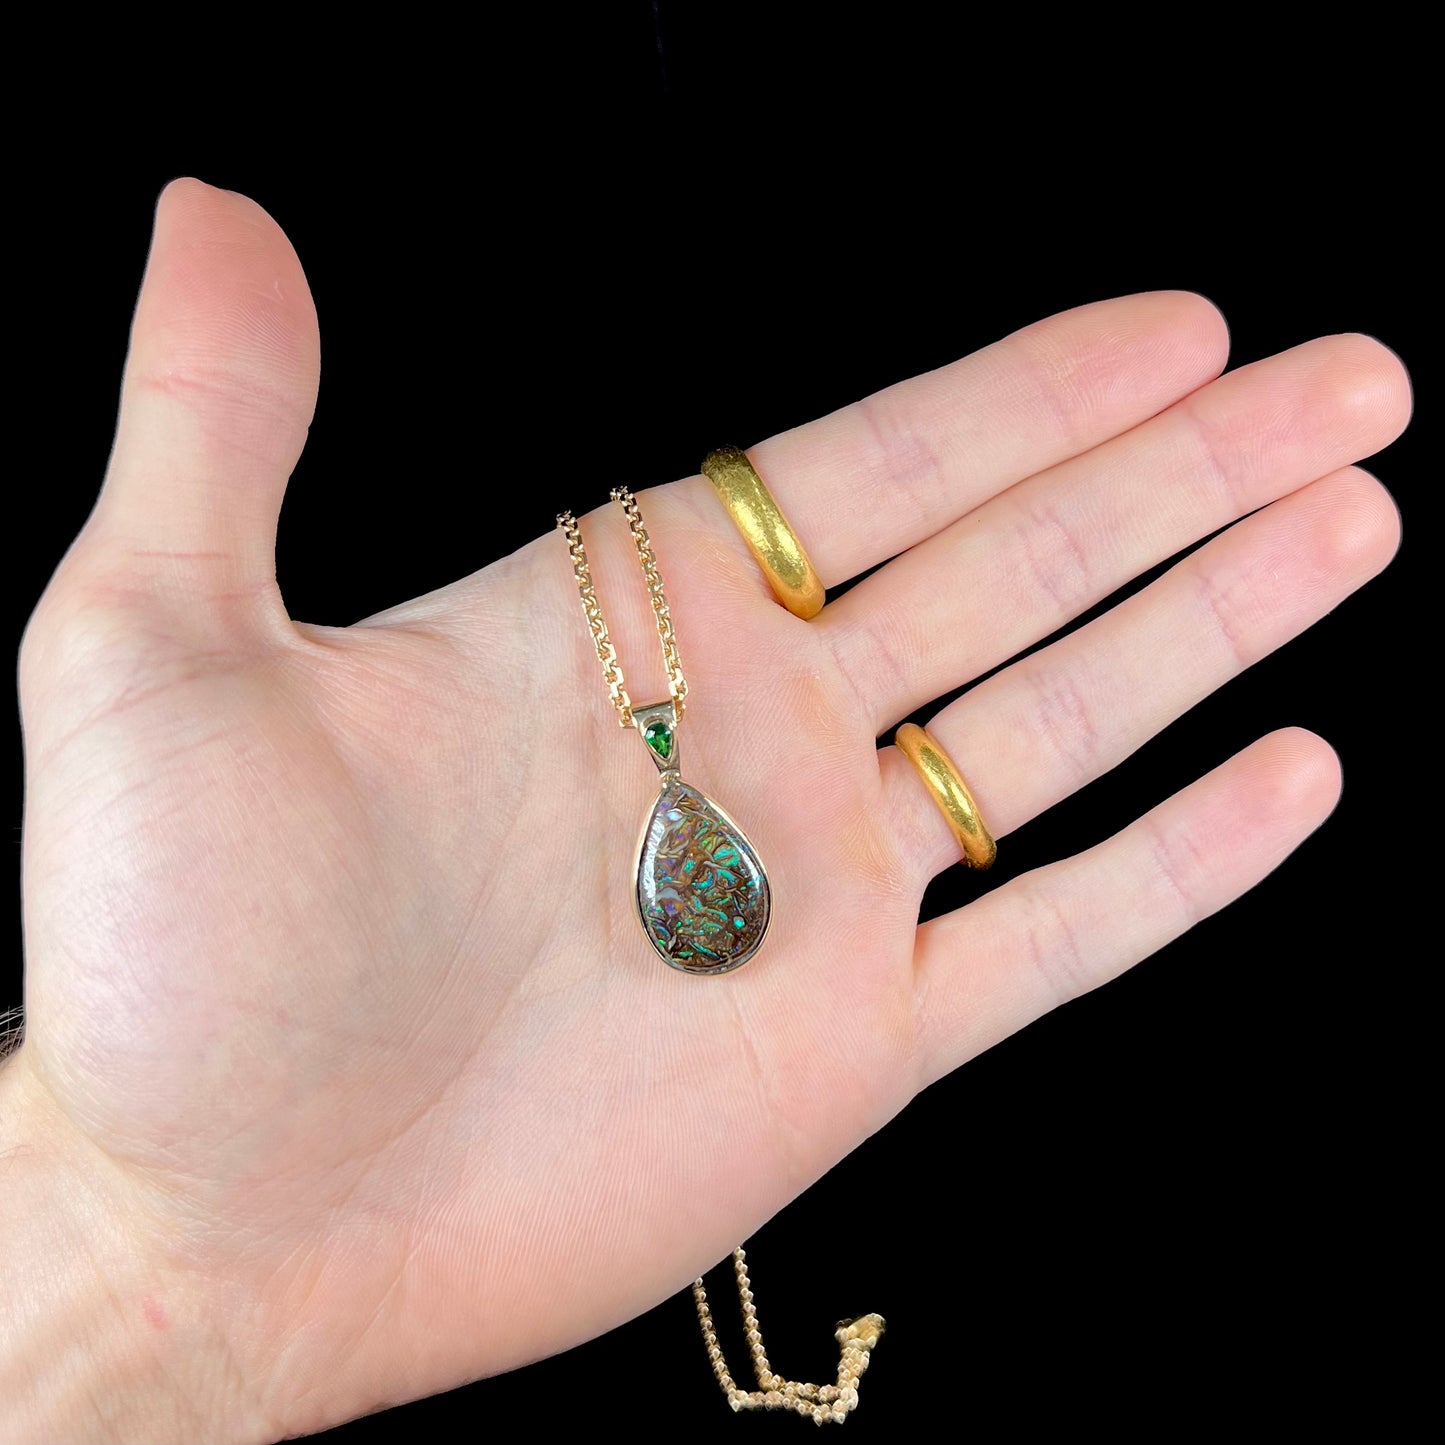 A ladies' yellow gold pendant set with a natural Koroit, Australian boulder opal and a tsavorite garnet accent stone.